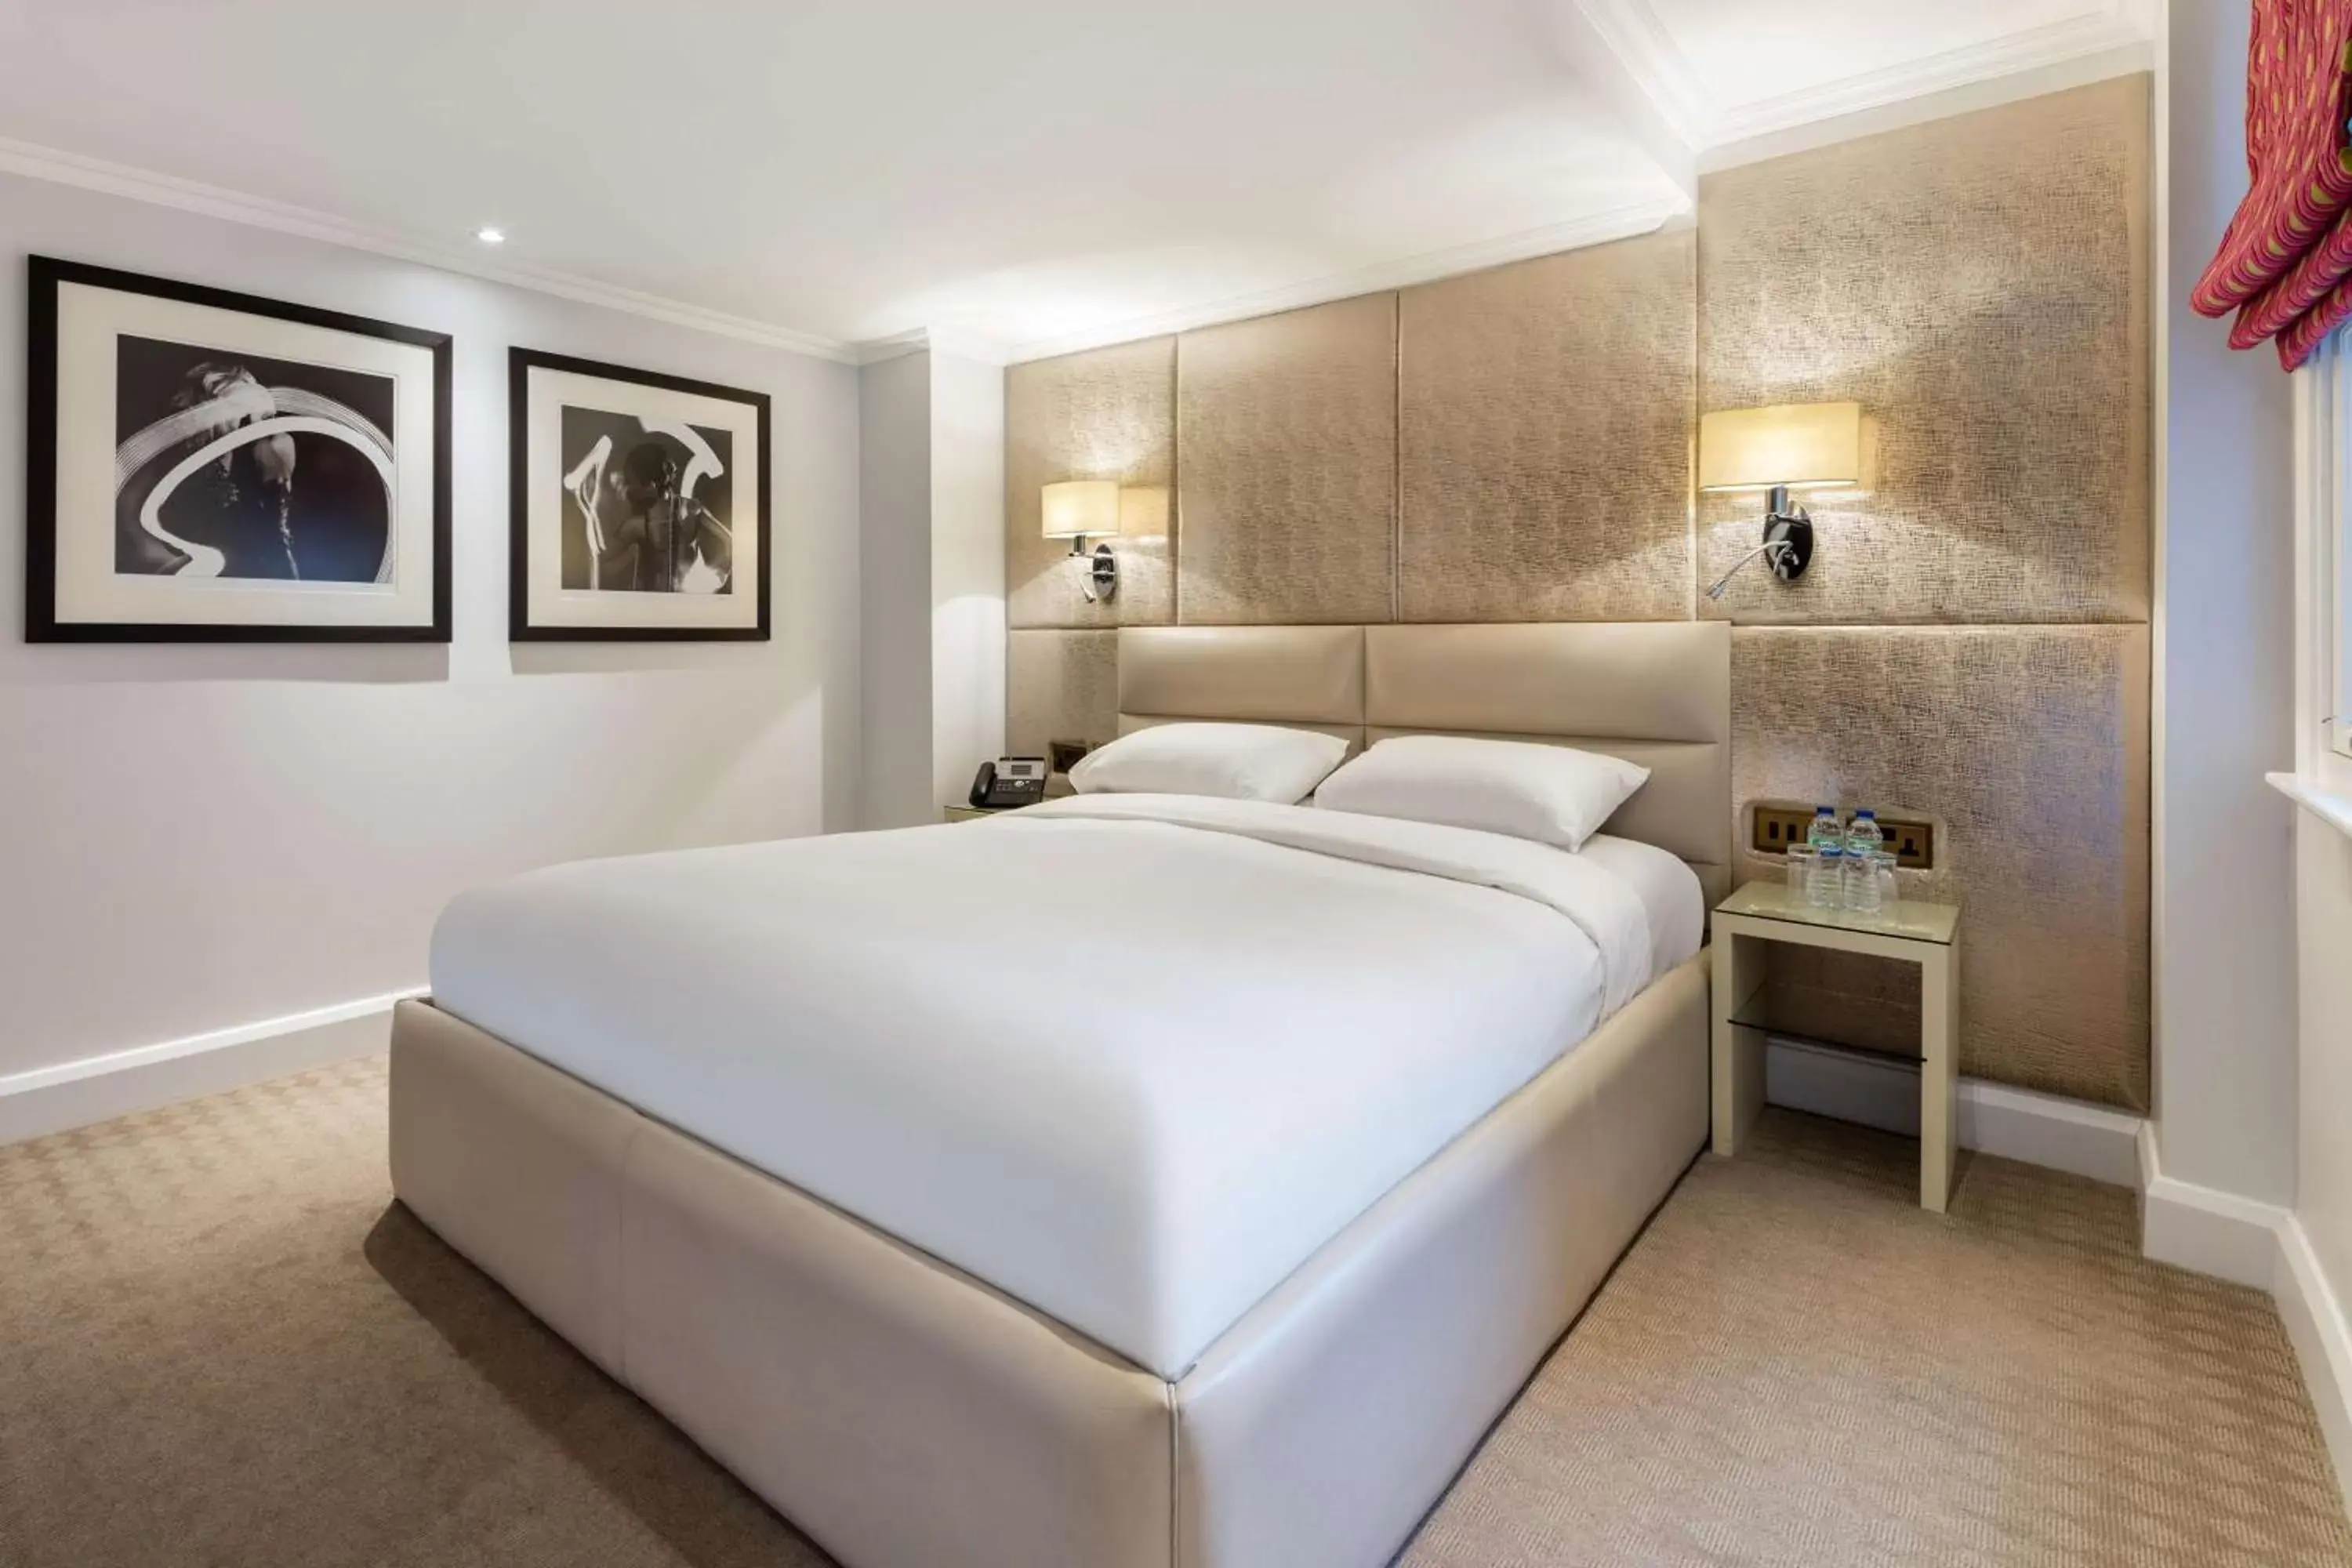 Premium Room in Radisson Blu Edwardian Mercer Street Hotel, London